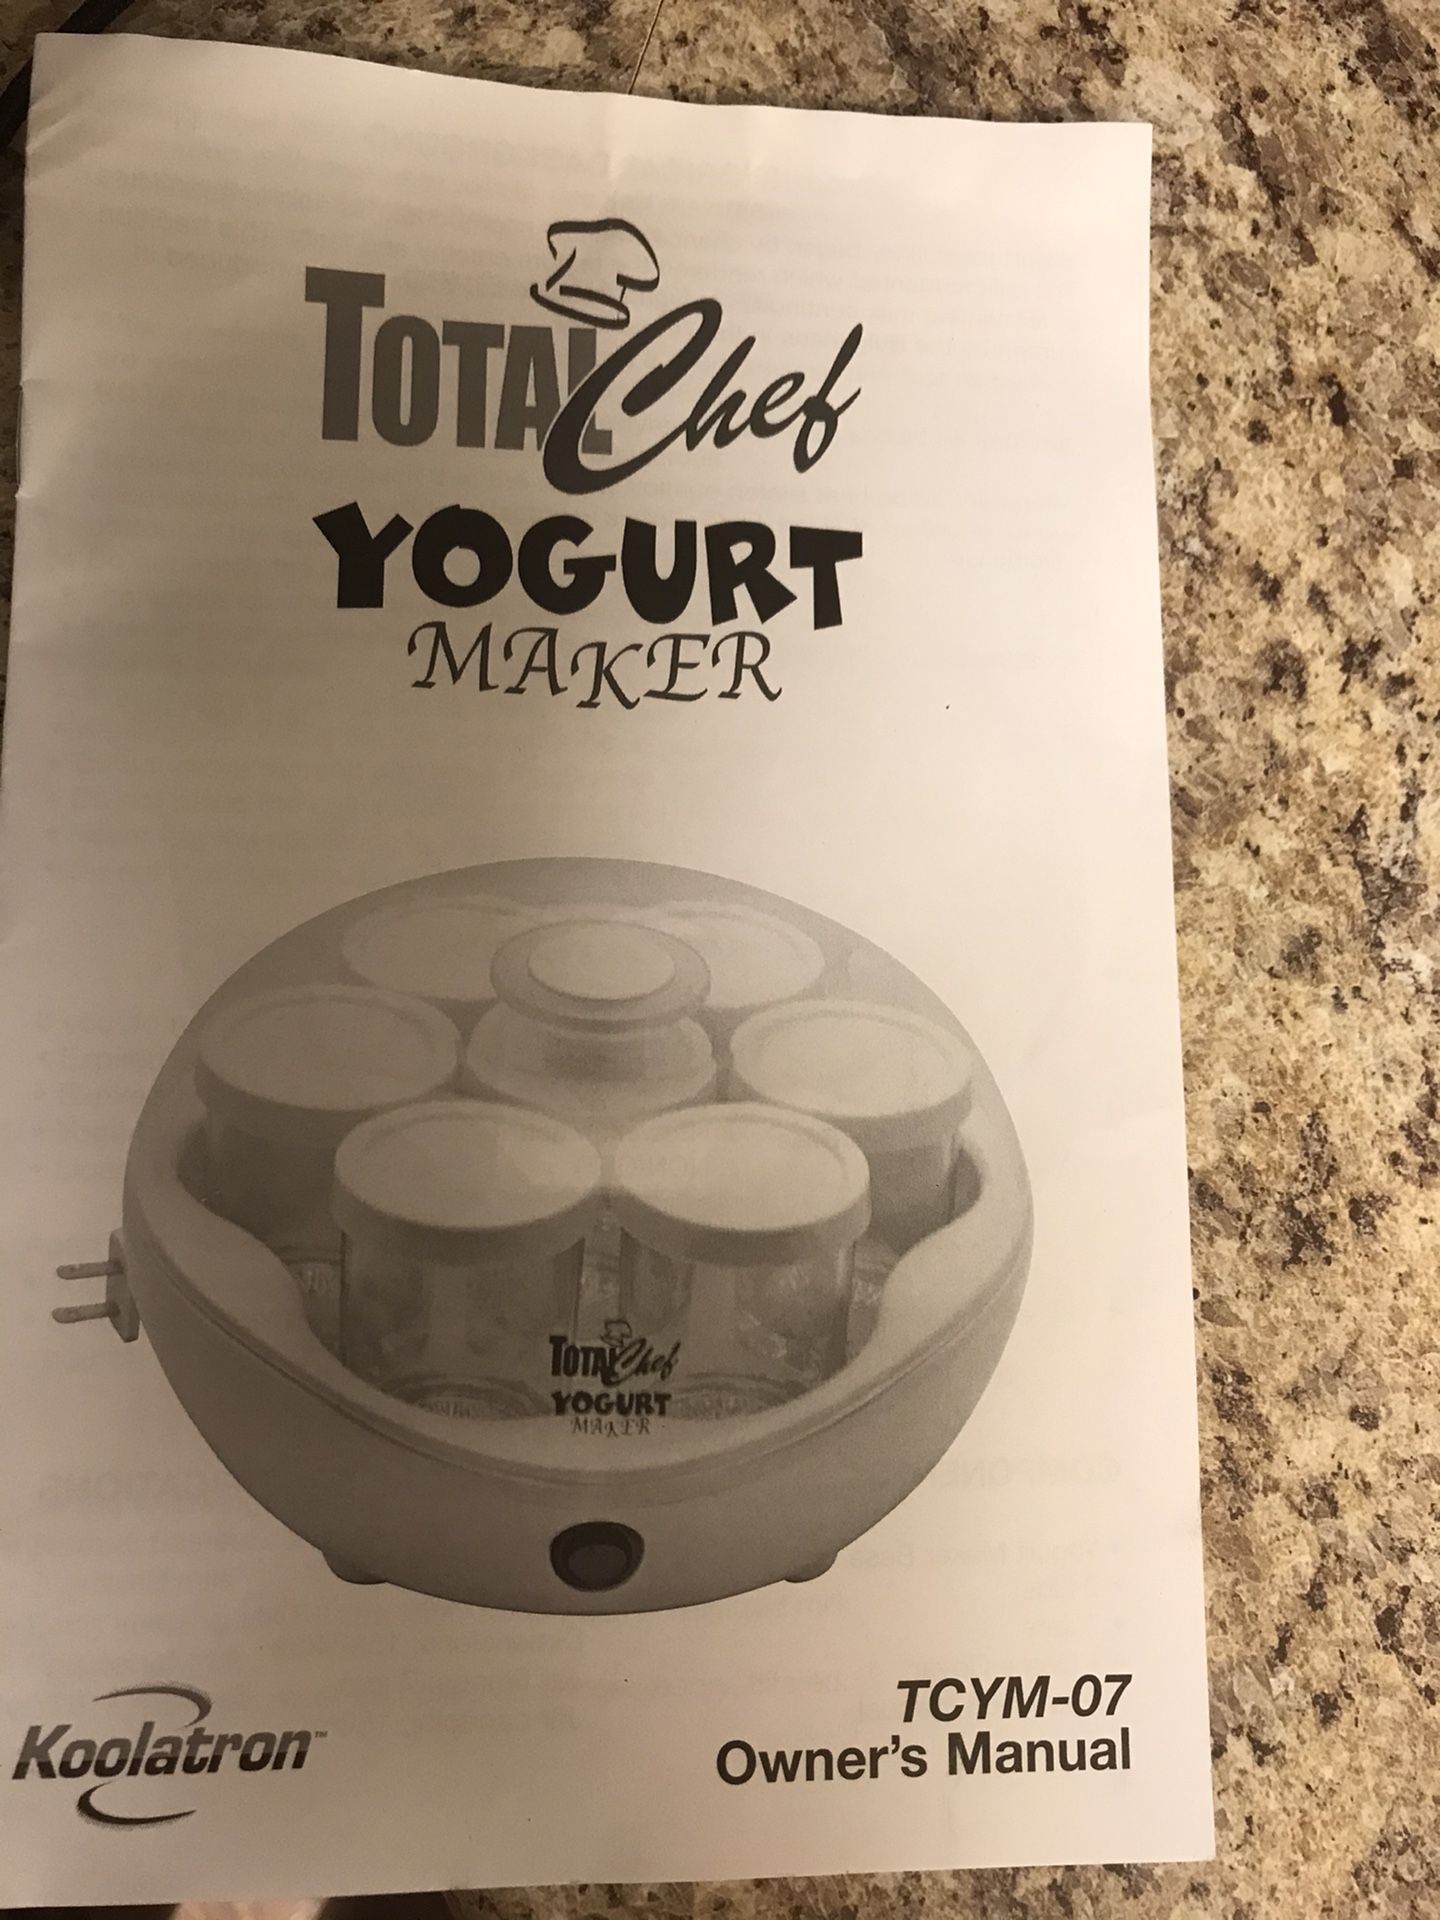 Total chef yogurt maker